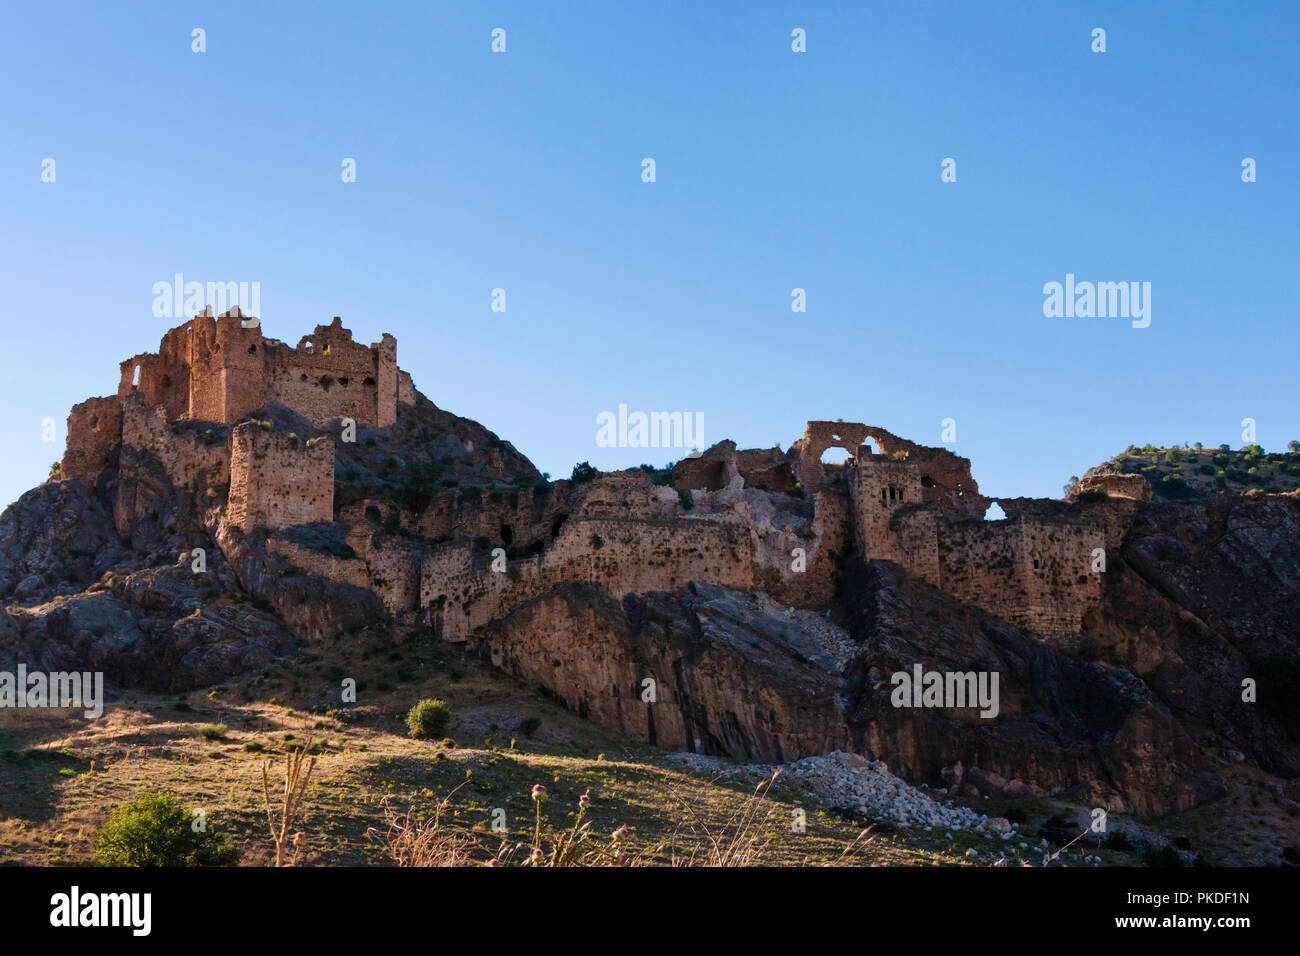 Eski Khata (Old Castle), near Mt. Nemrut, Turkey Stock Photo